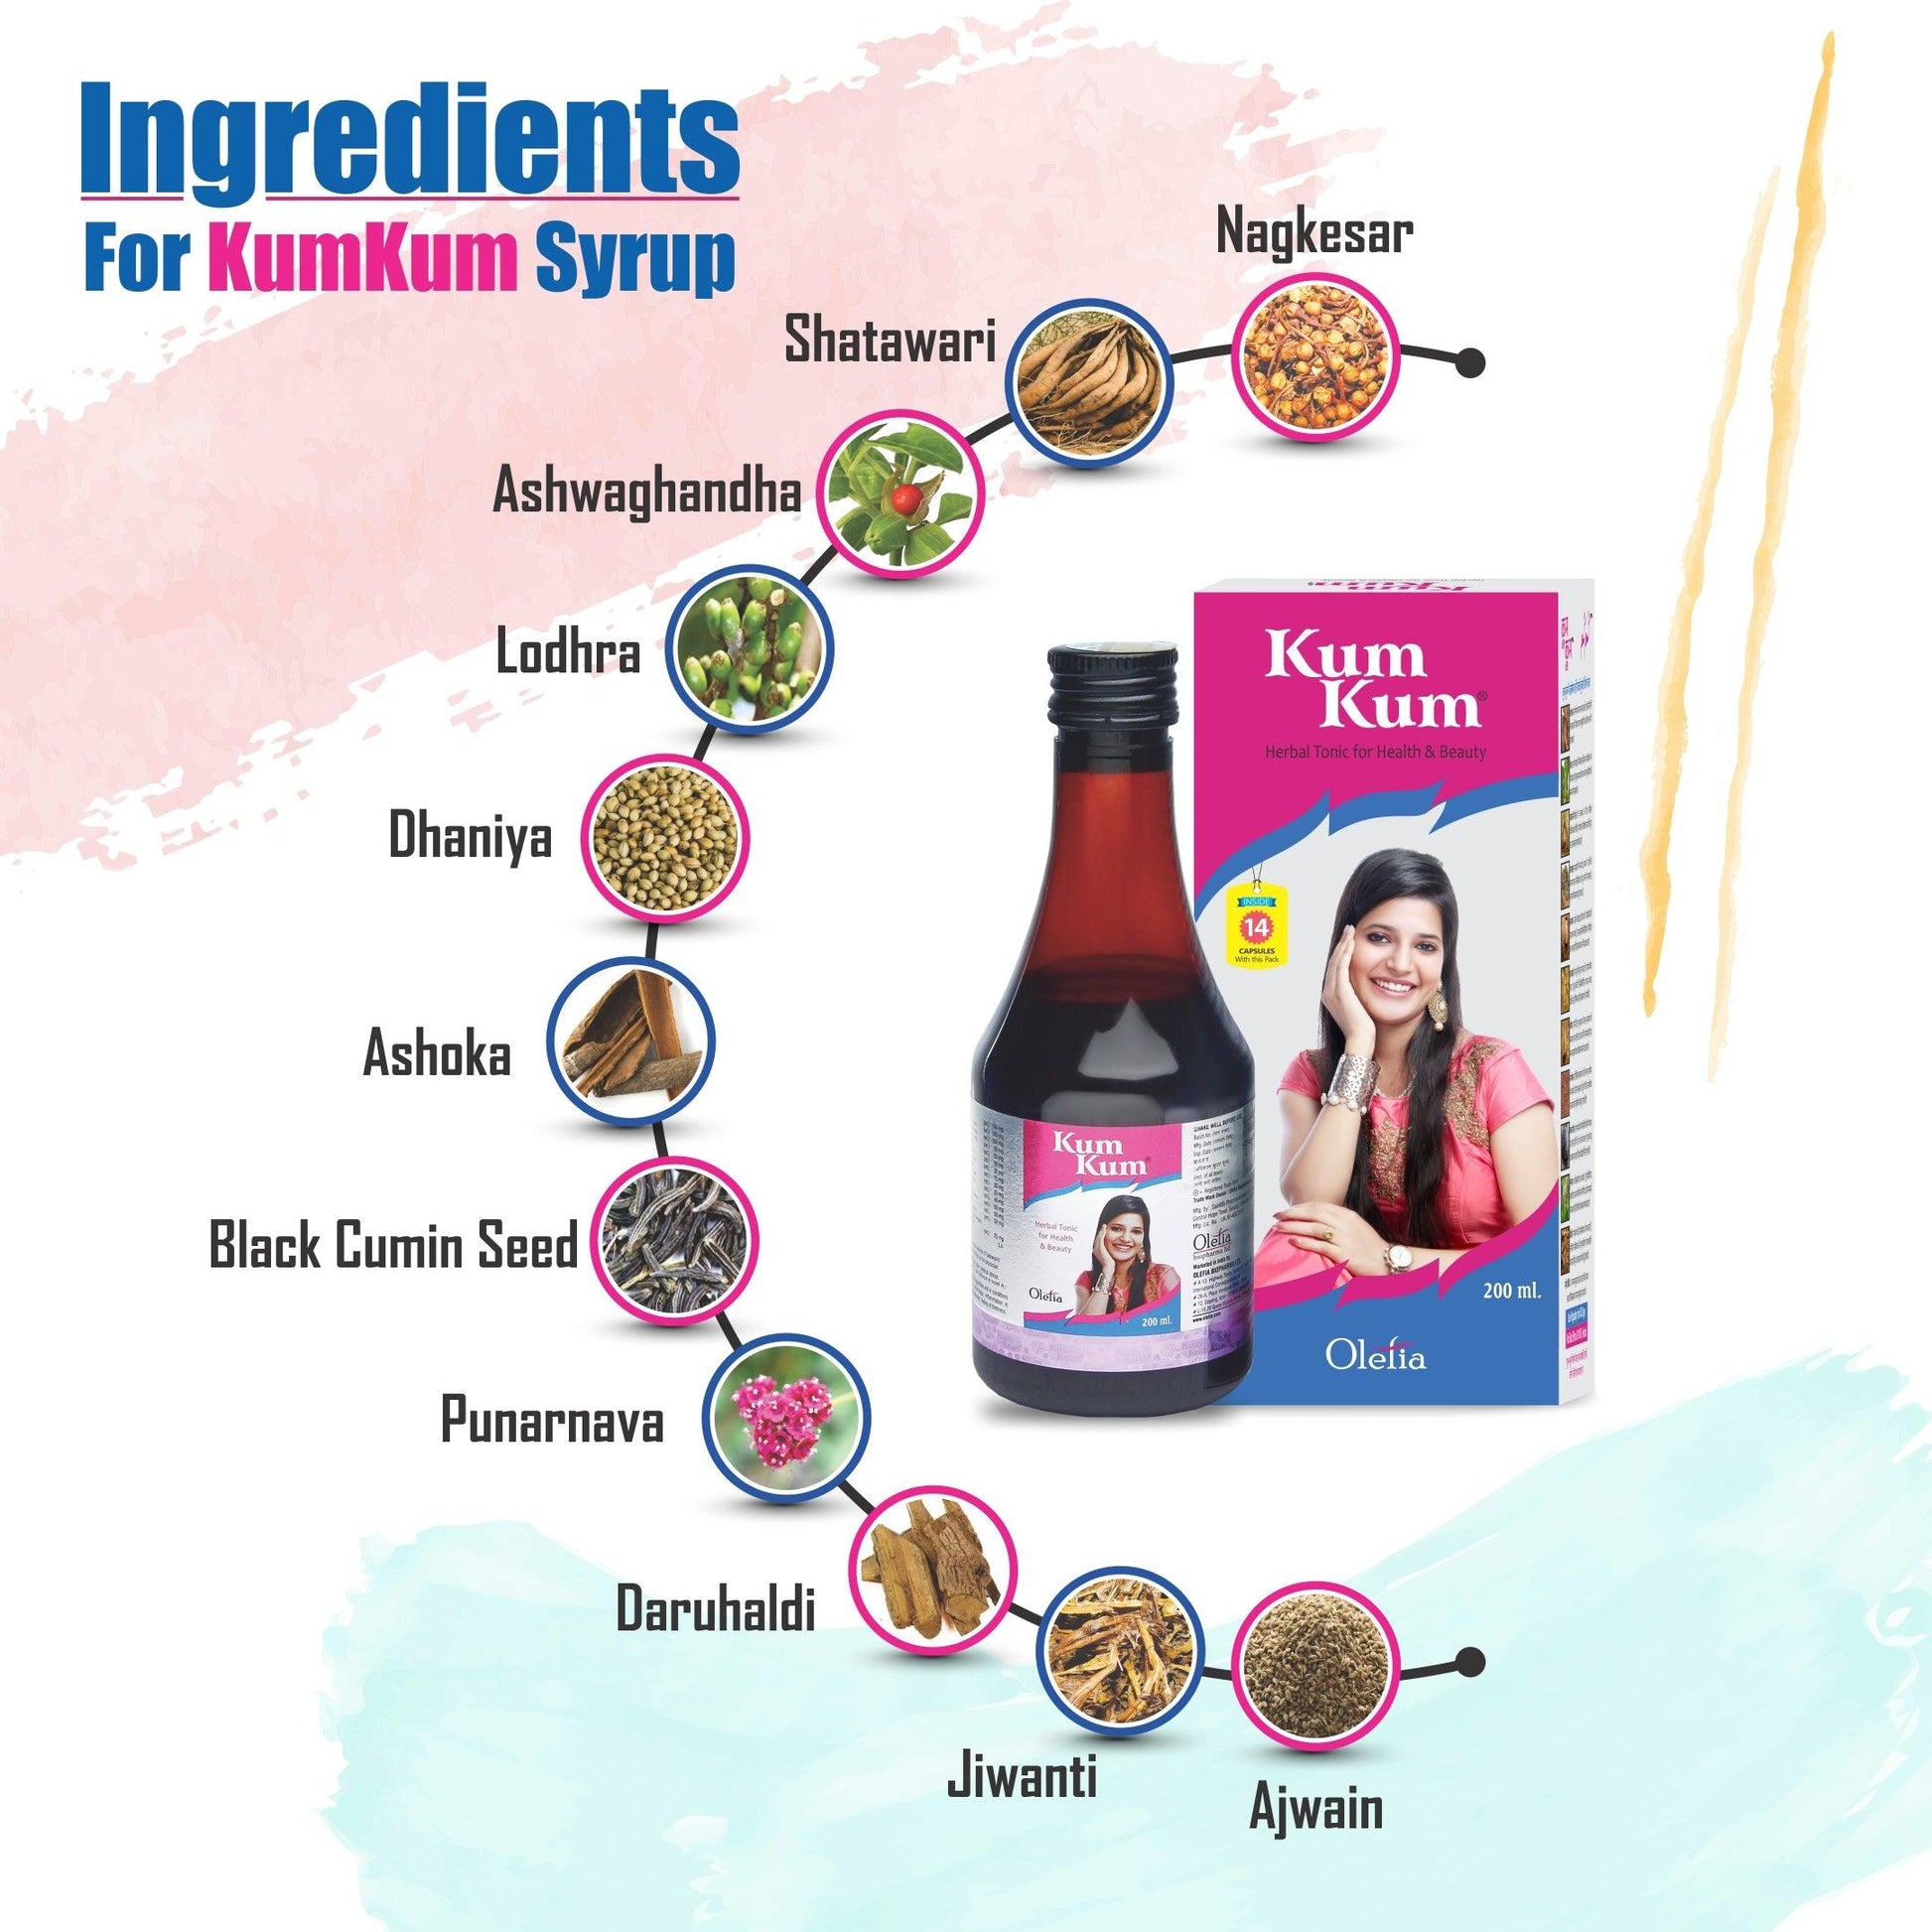 KumKum Herbal Syrup for Women's Internal Problems, Health and Beauty - Olefia Biopharma Limited